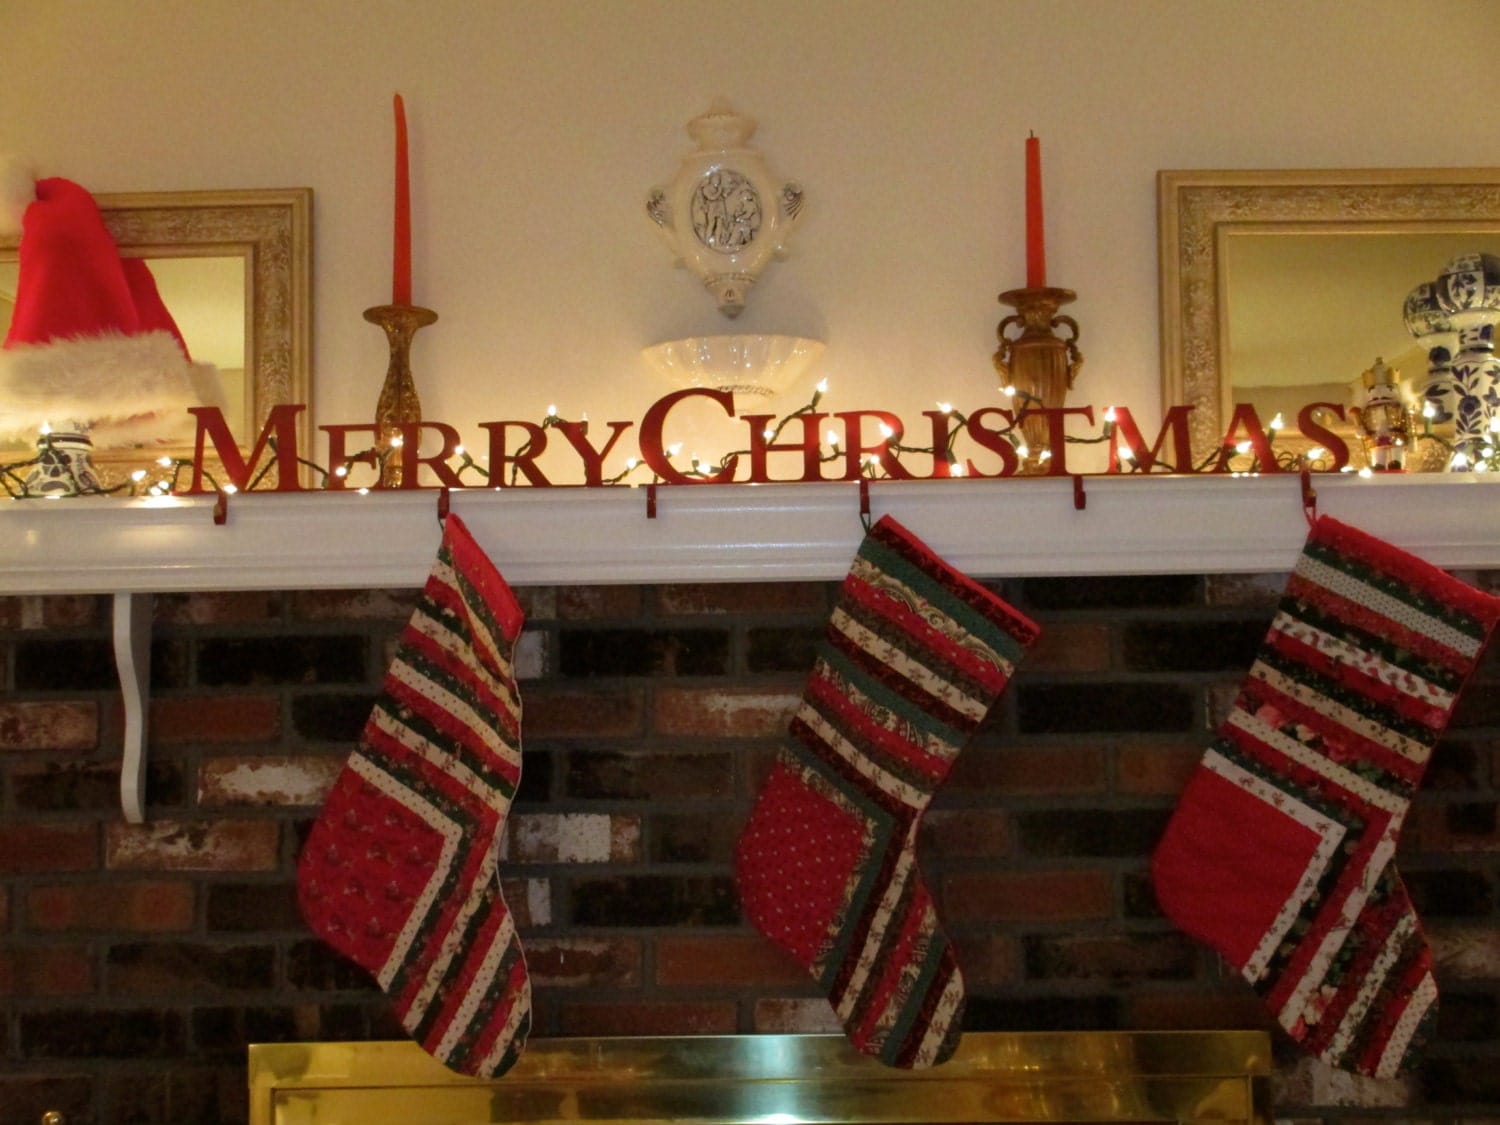 Christmas stocking holders